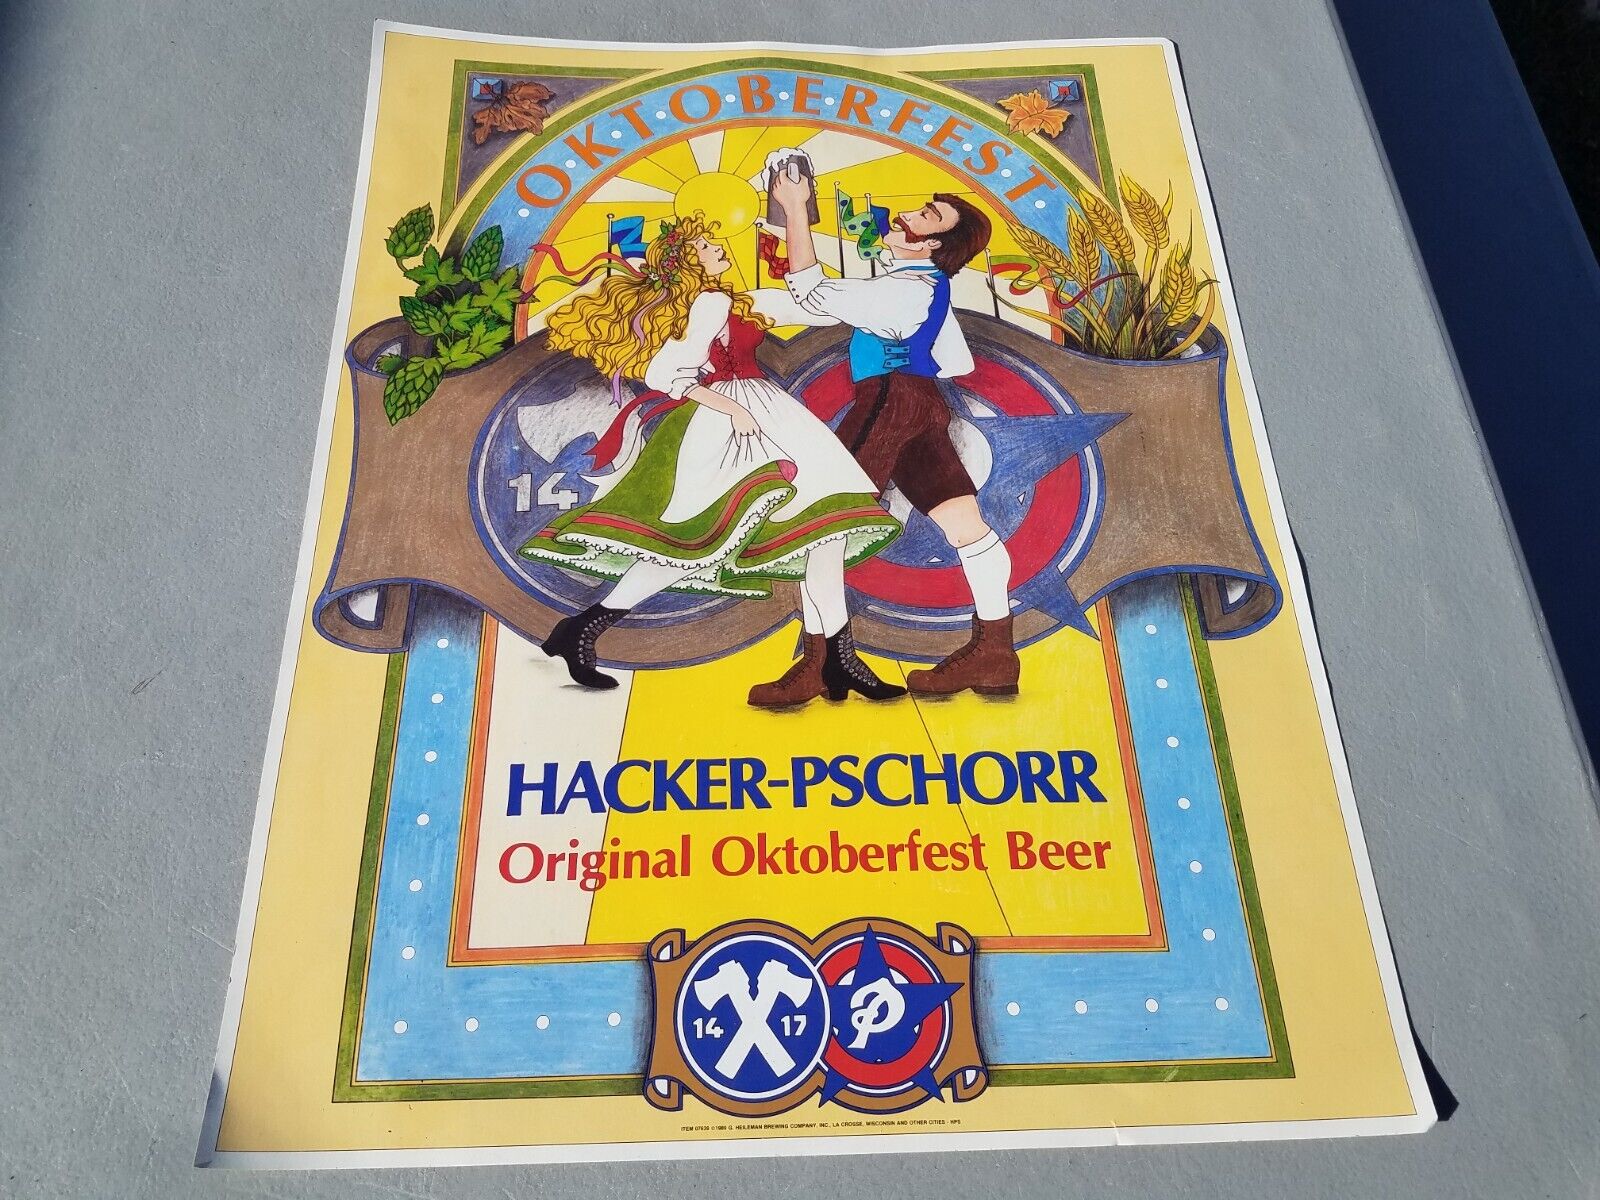 Vtg. 1989 Hacker-Pschorr Original Oktoberfest Beer Ad Poster Man Cave Decor